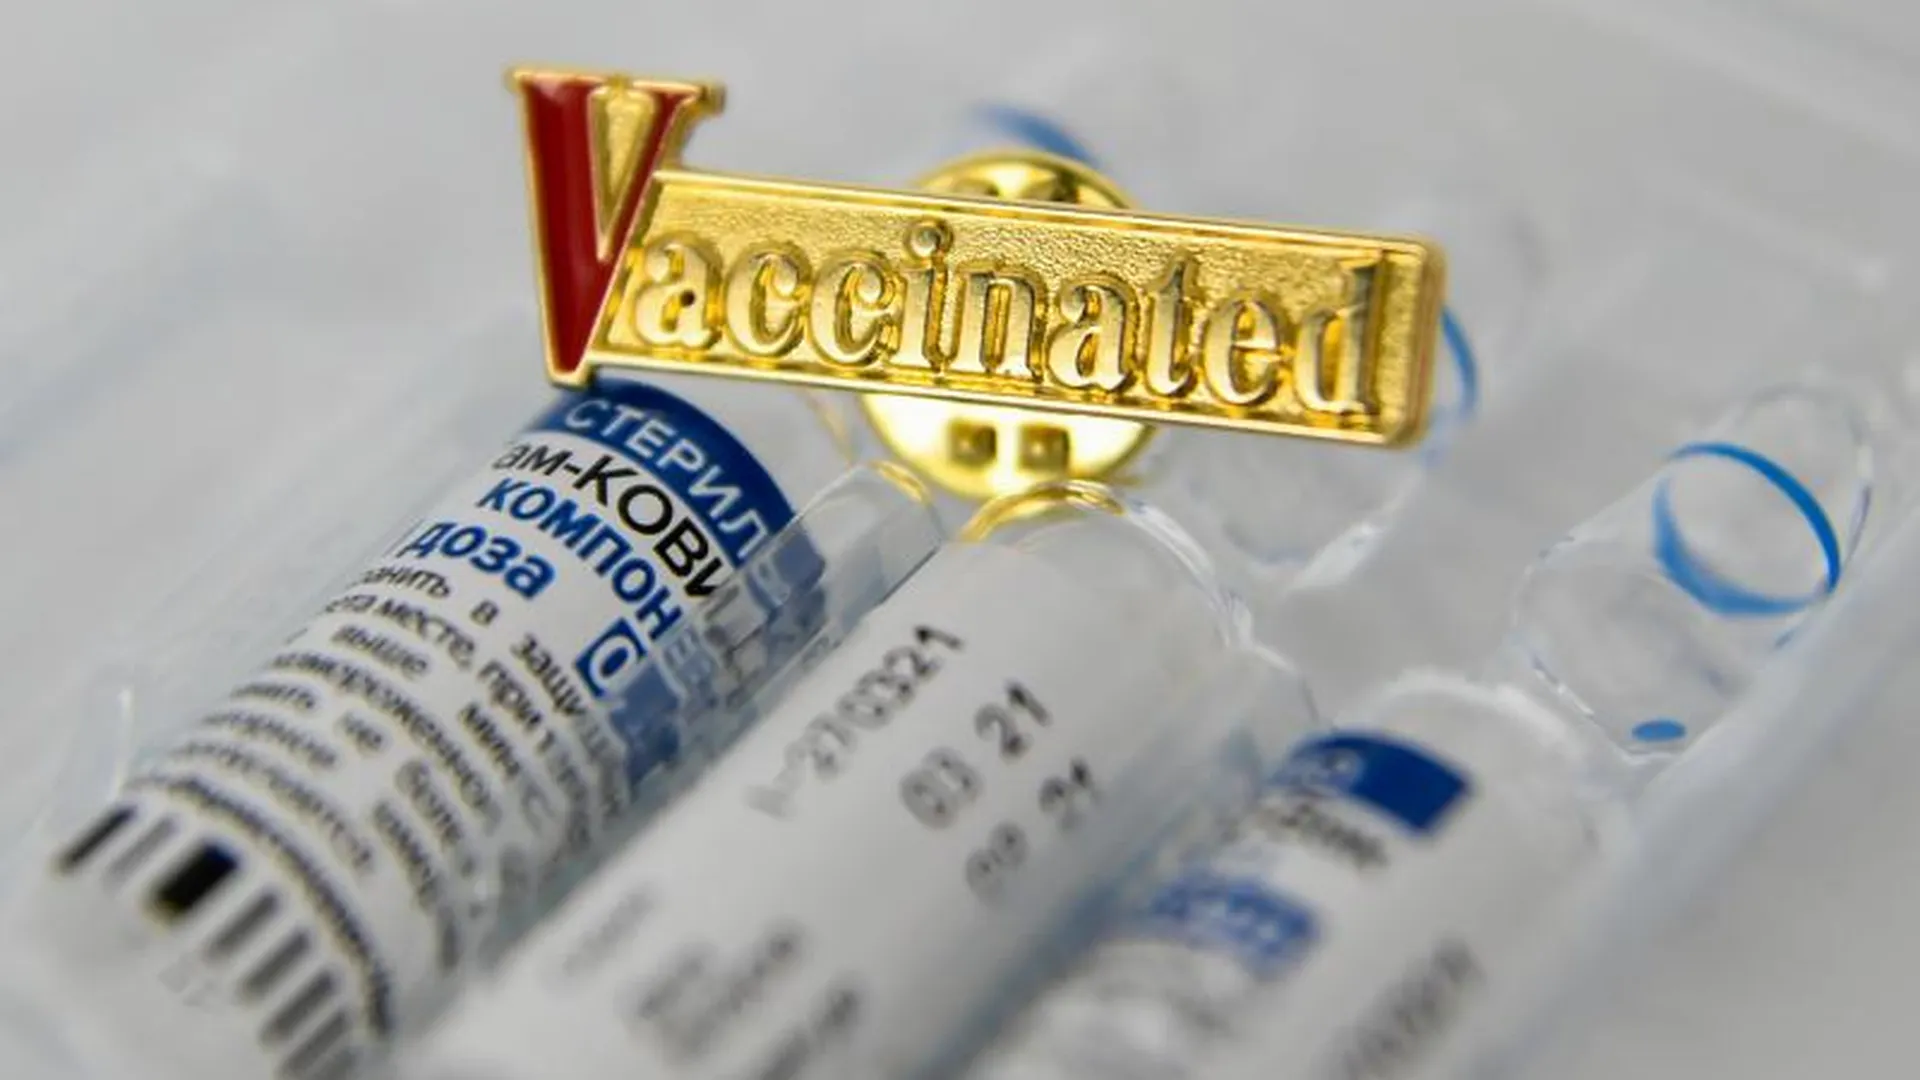 Акция по раздаче значков Vaccinated в Пушкине отменяется 